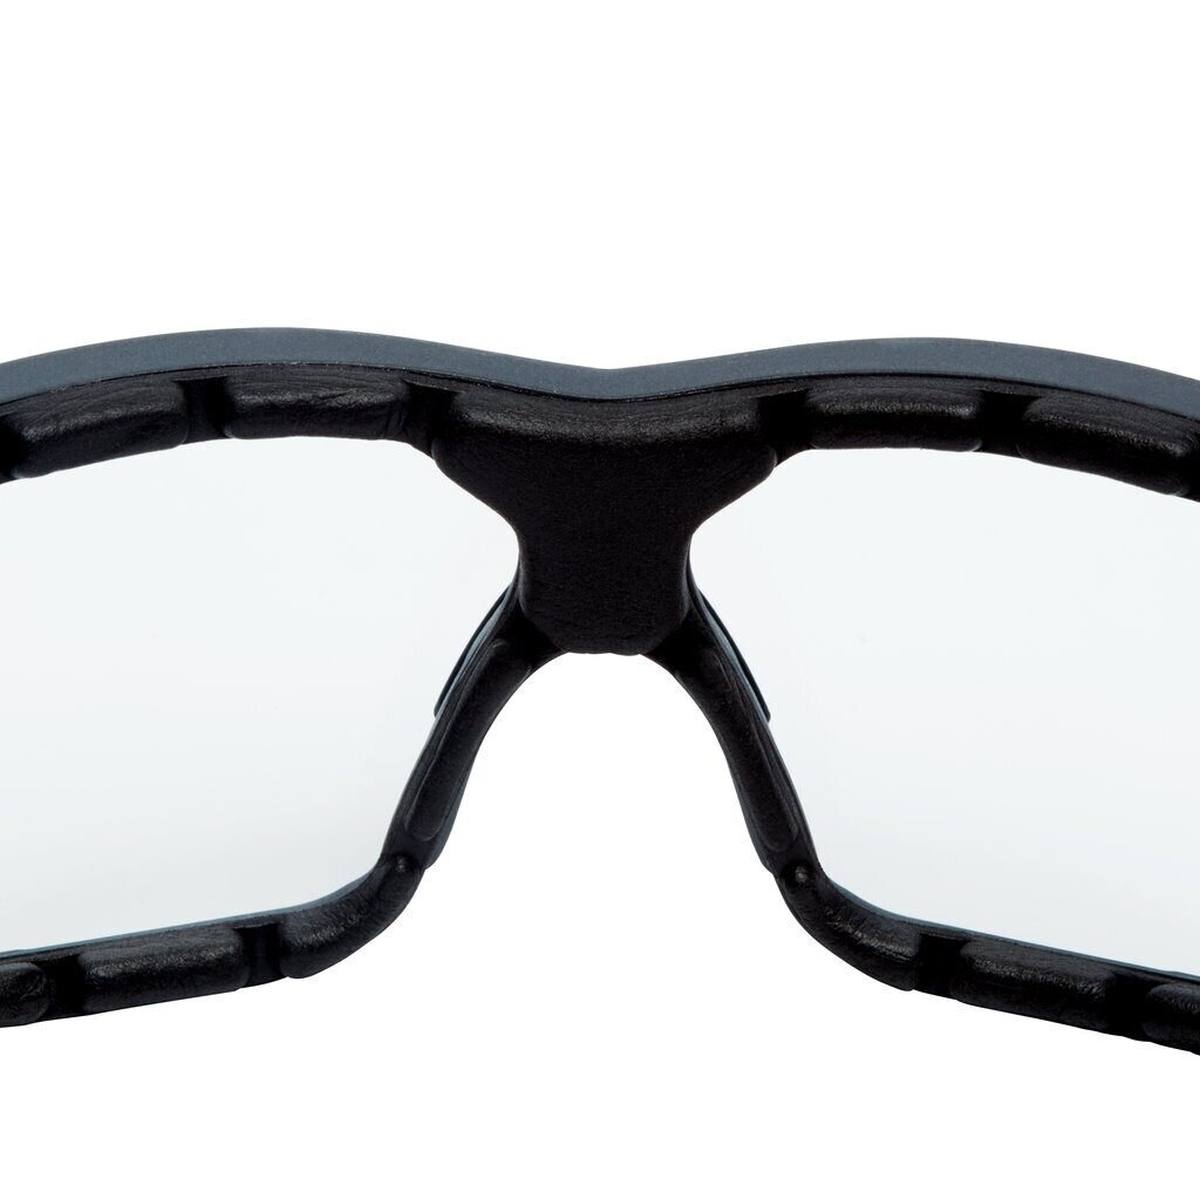 3M SecureFit 600 Schutzbrille, graue Bügel, Schaumrahmen, Scotchgard Anti-Fog-/Antikratz-Beschichtung (K&N), transparente Scheibe, SF601SGAF/FI-EU